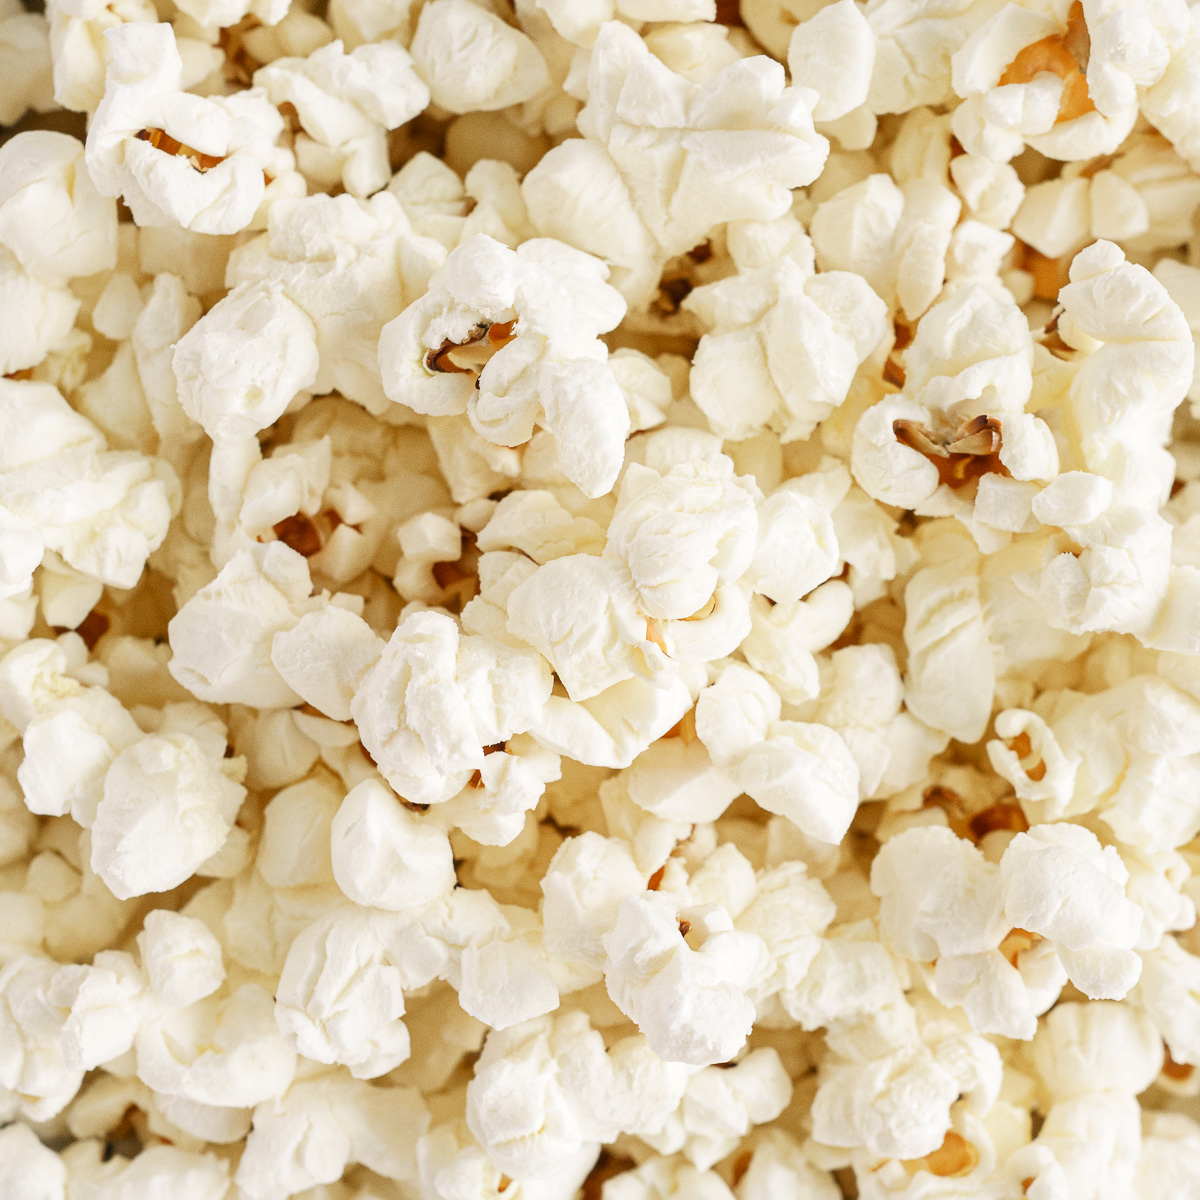 https://gatheringdreams.com/wp-content/uploads/2022/04/healthy-popcorn-recipe-9.jpg